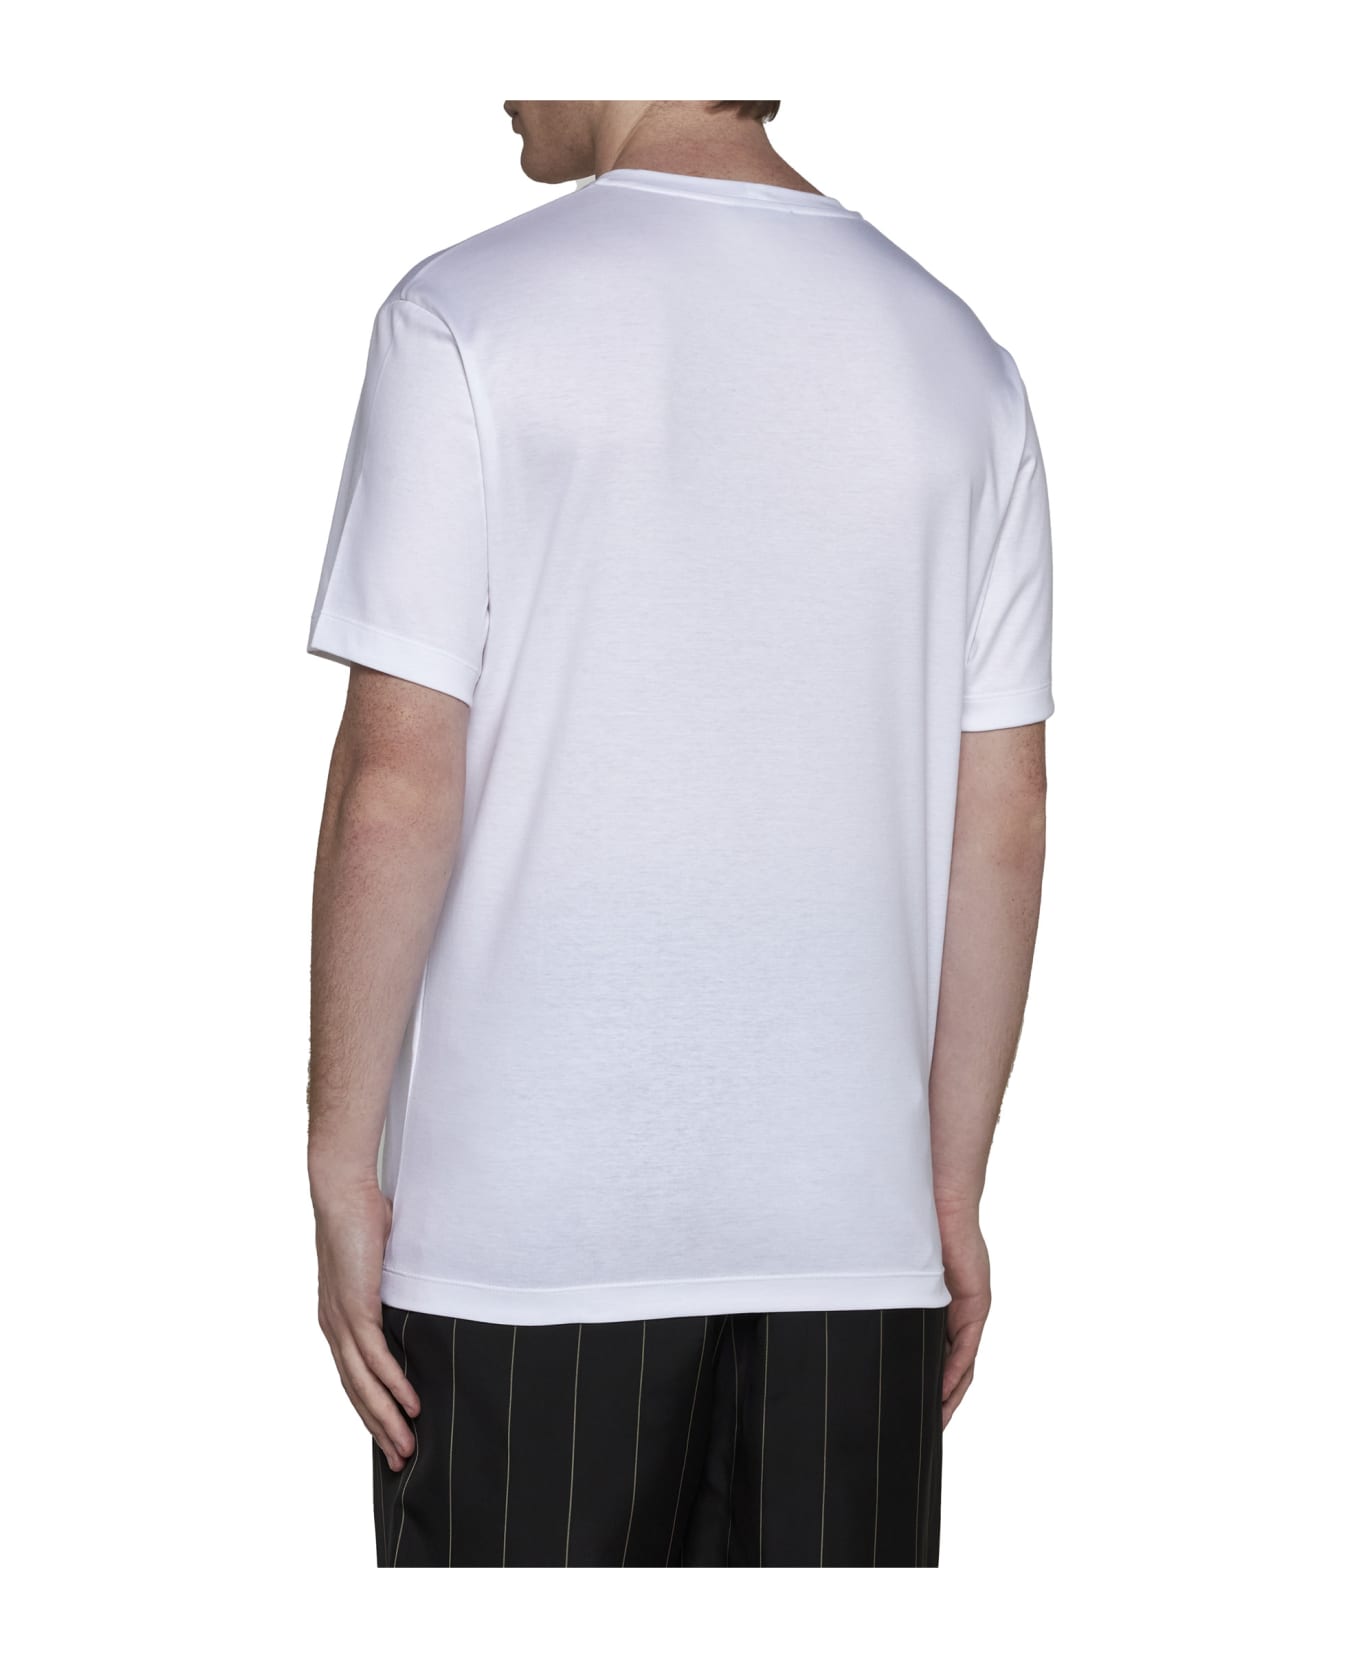 Giorgio Armani T-Shirt - Bianco ottico